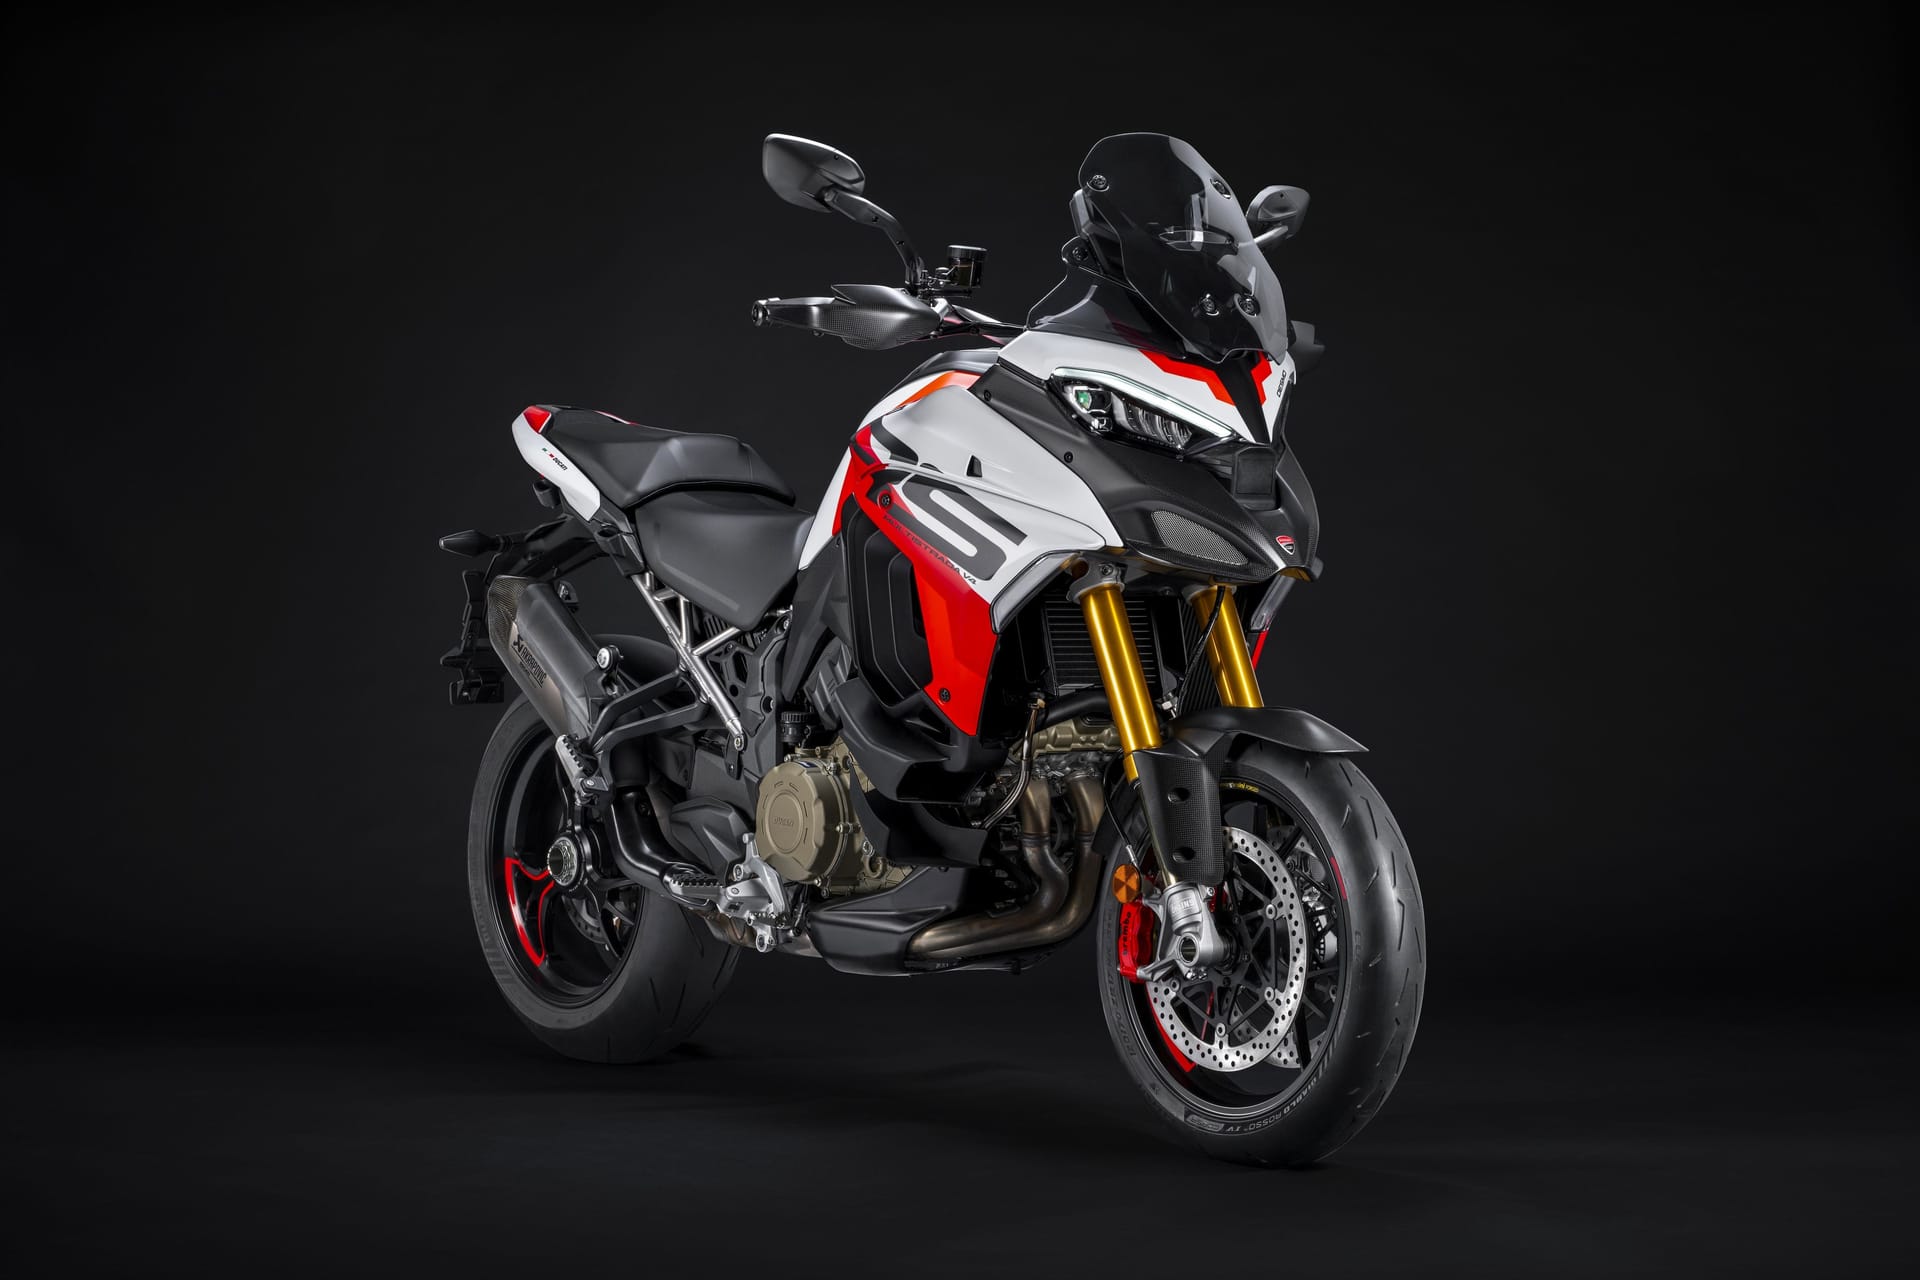 Neues Topmodell: Mit der V4 RS krönt Ducati die Multistrada-Baureihe.